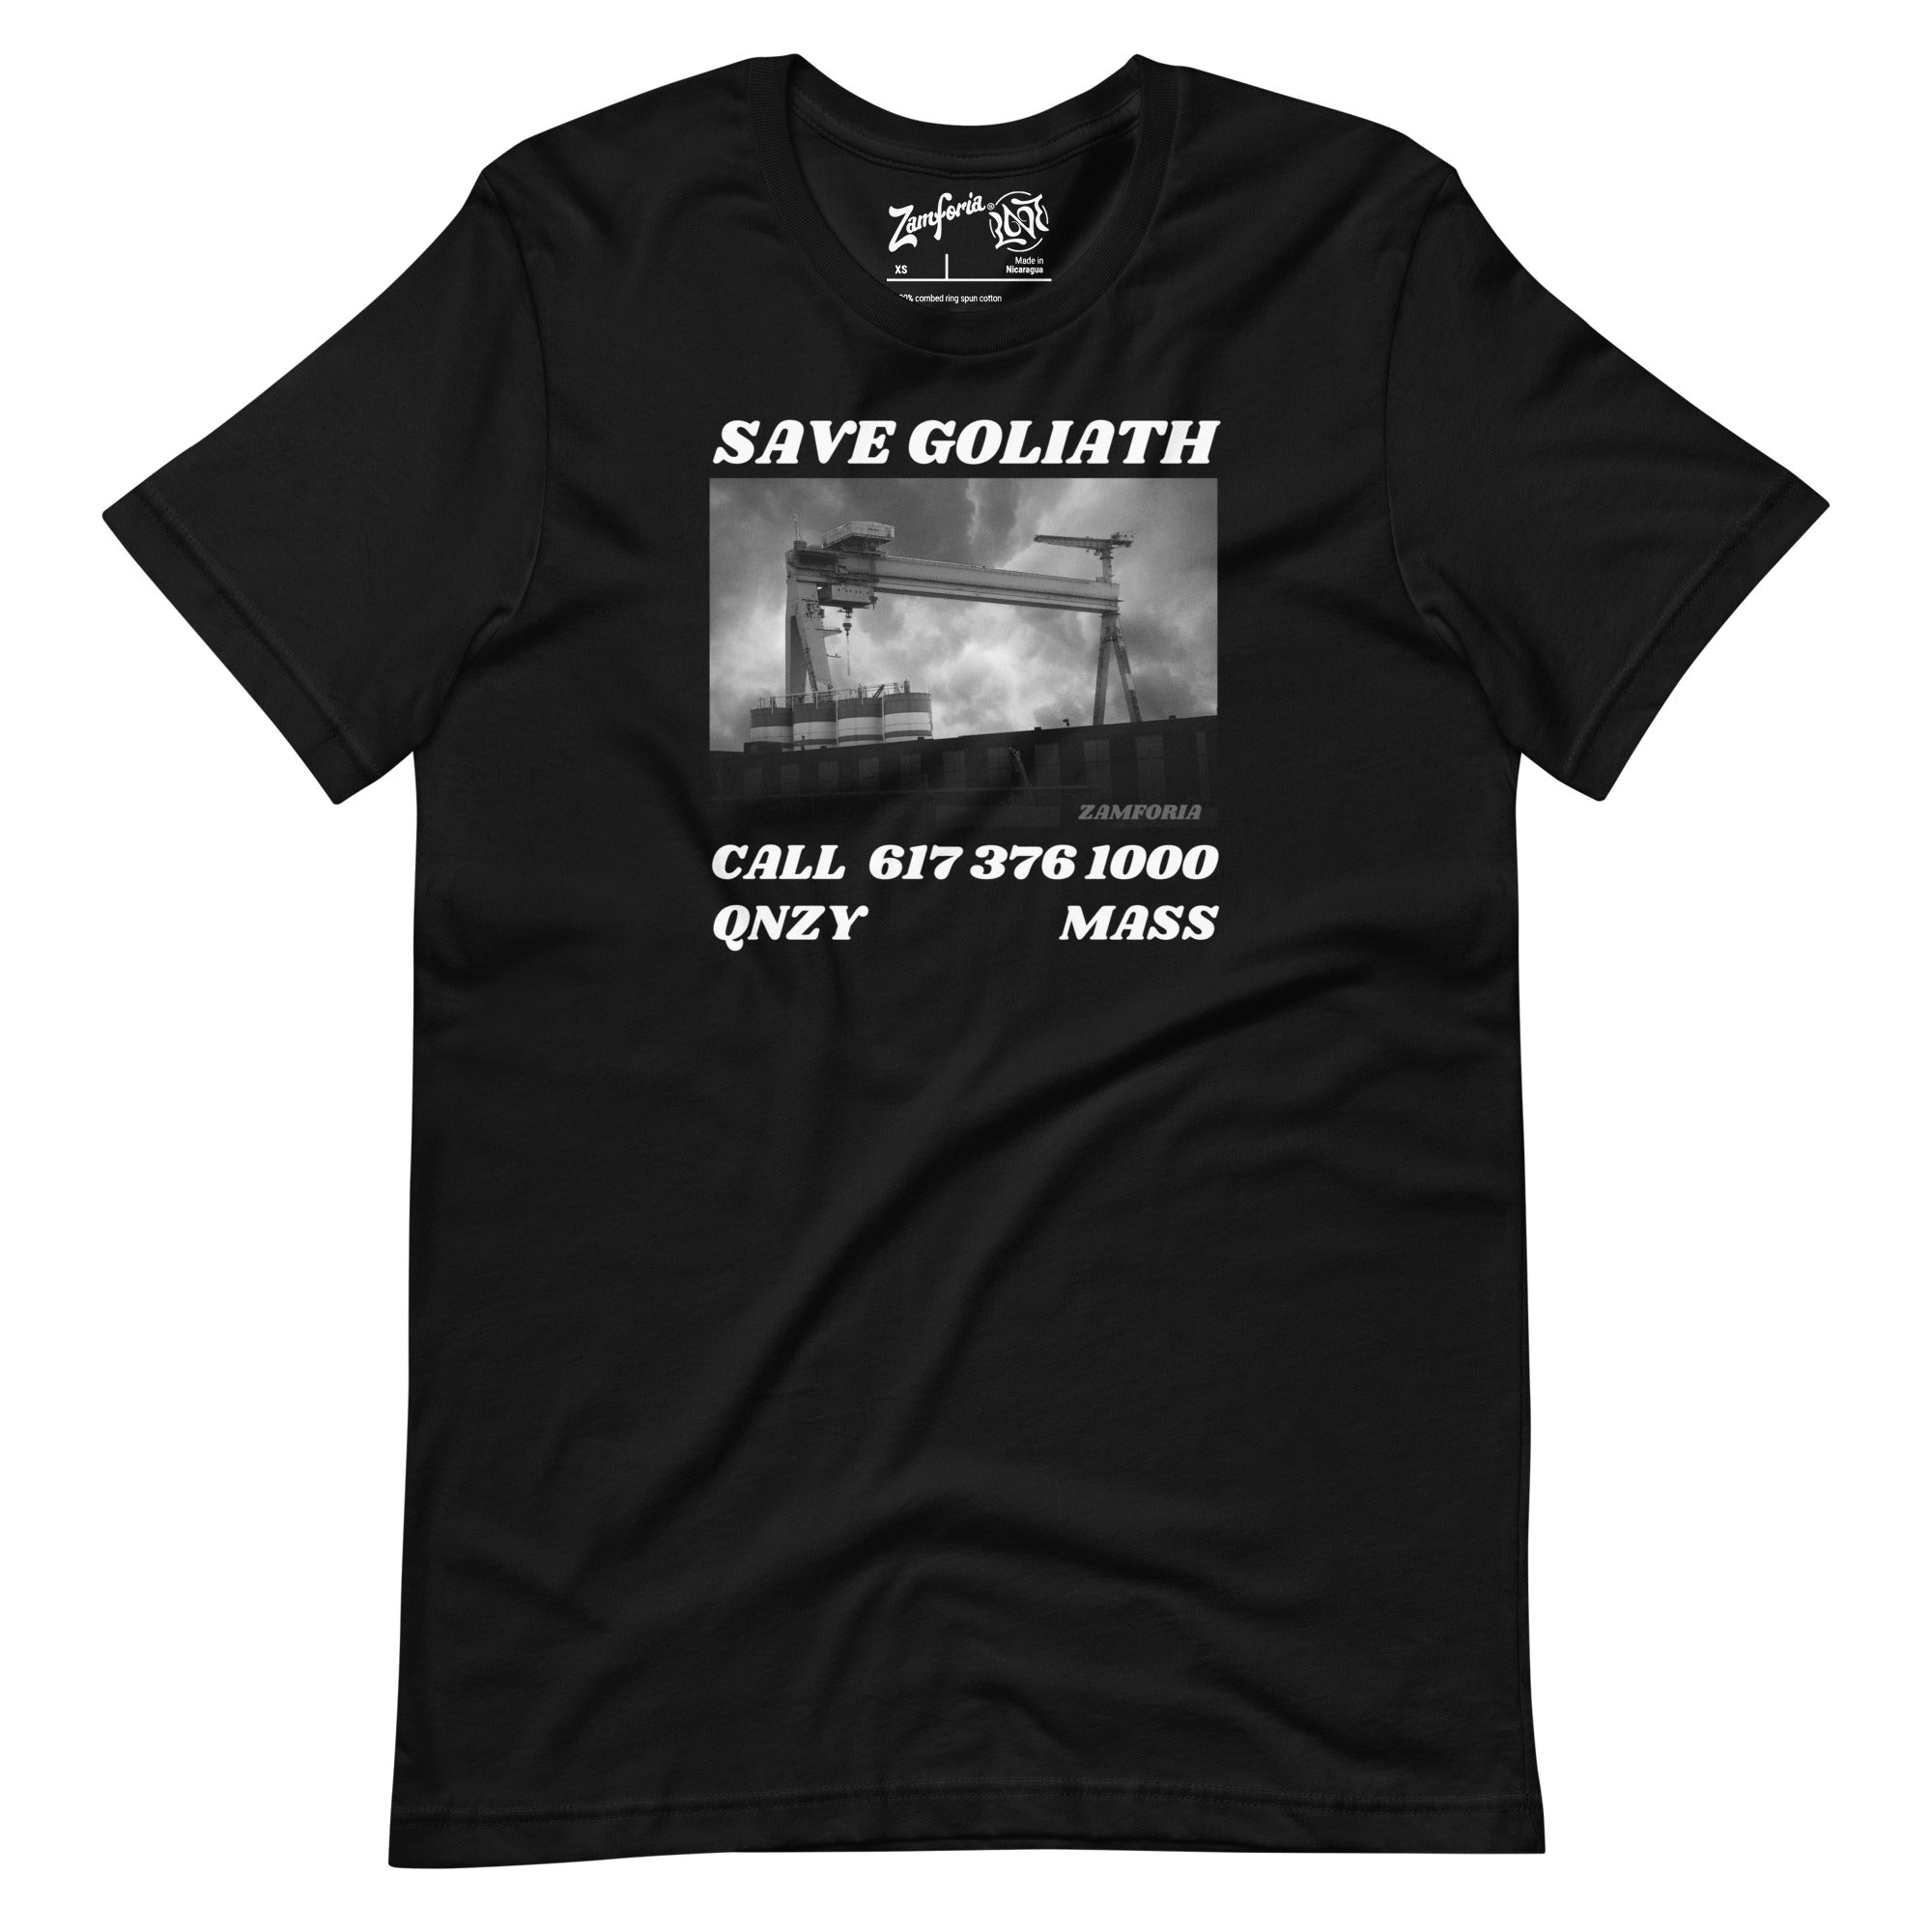 QNZY's "Save Goliath", V1